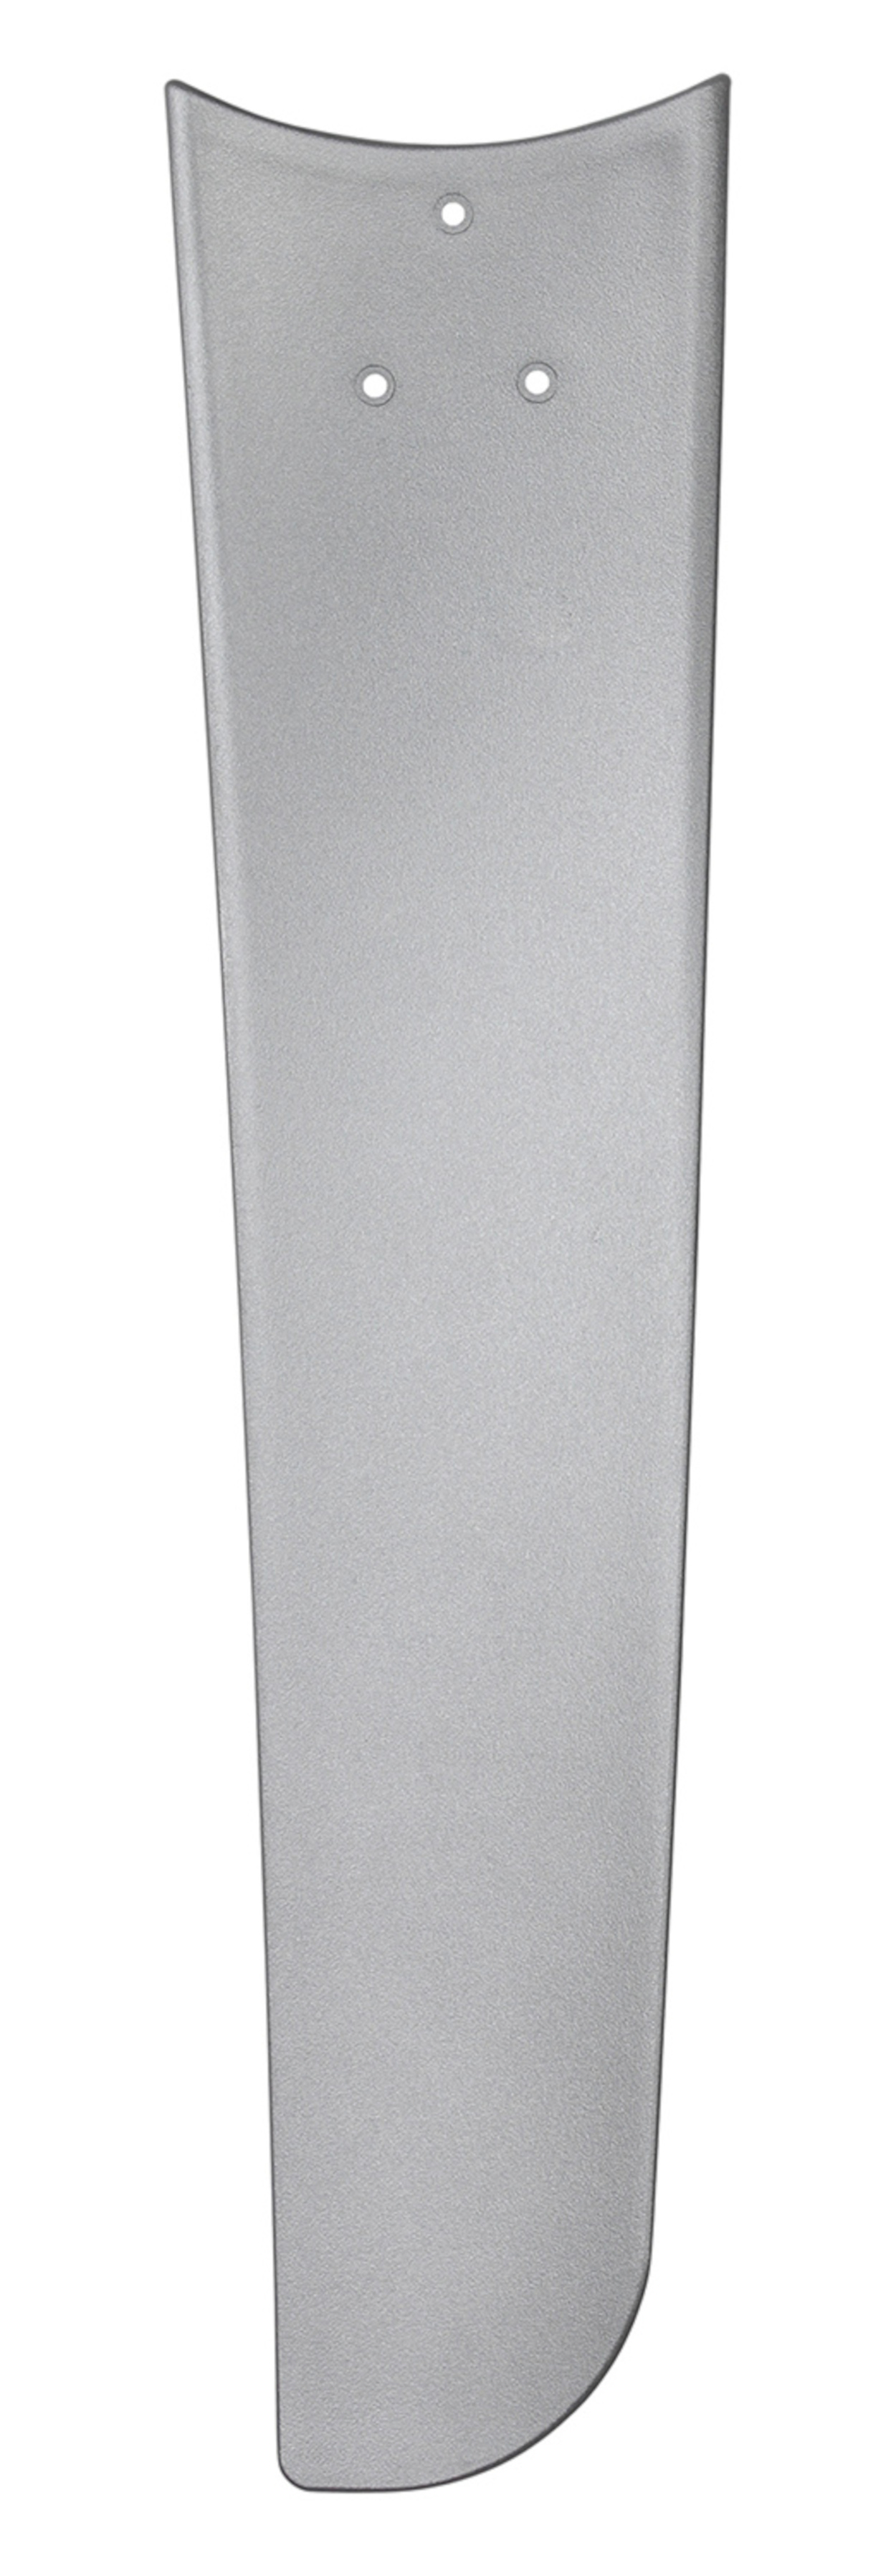 CASAFAN Mirage Deckenventilator Grau Watt) / Silber (62